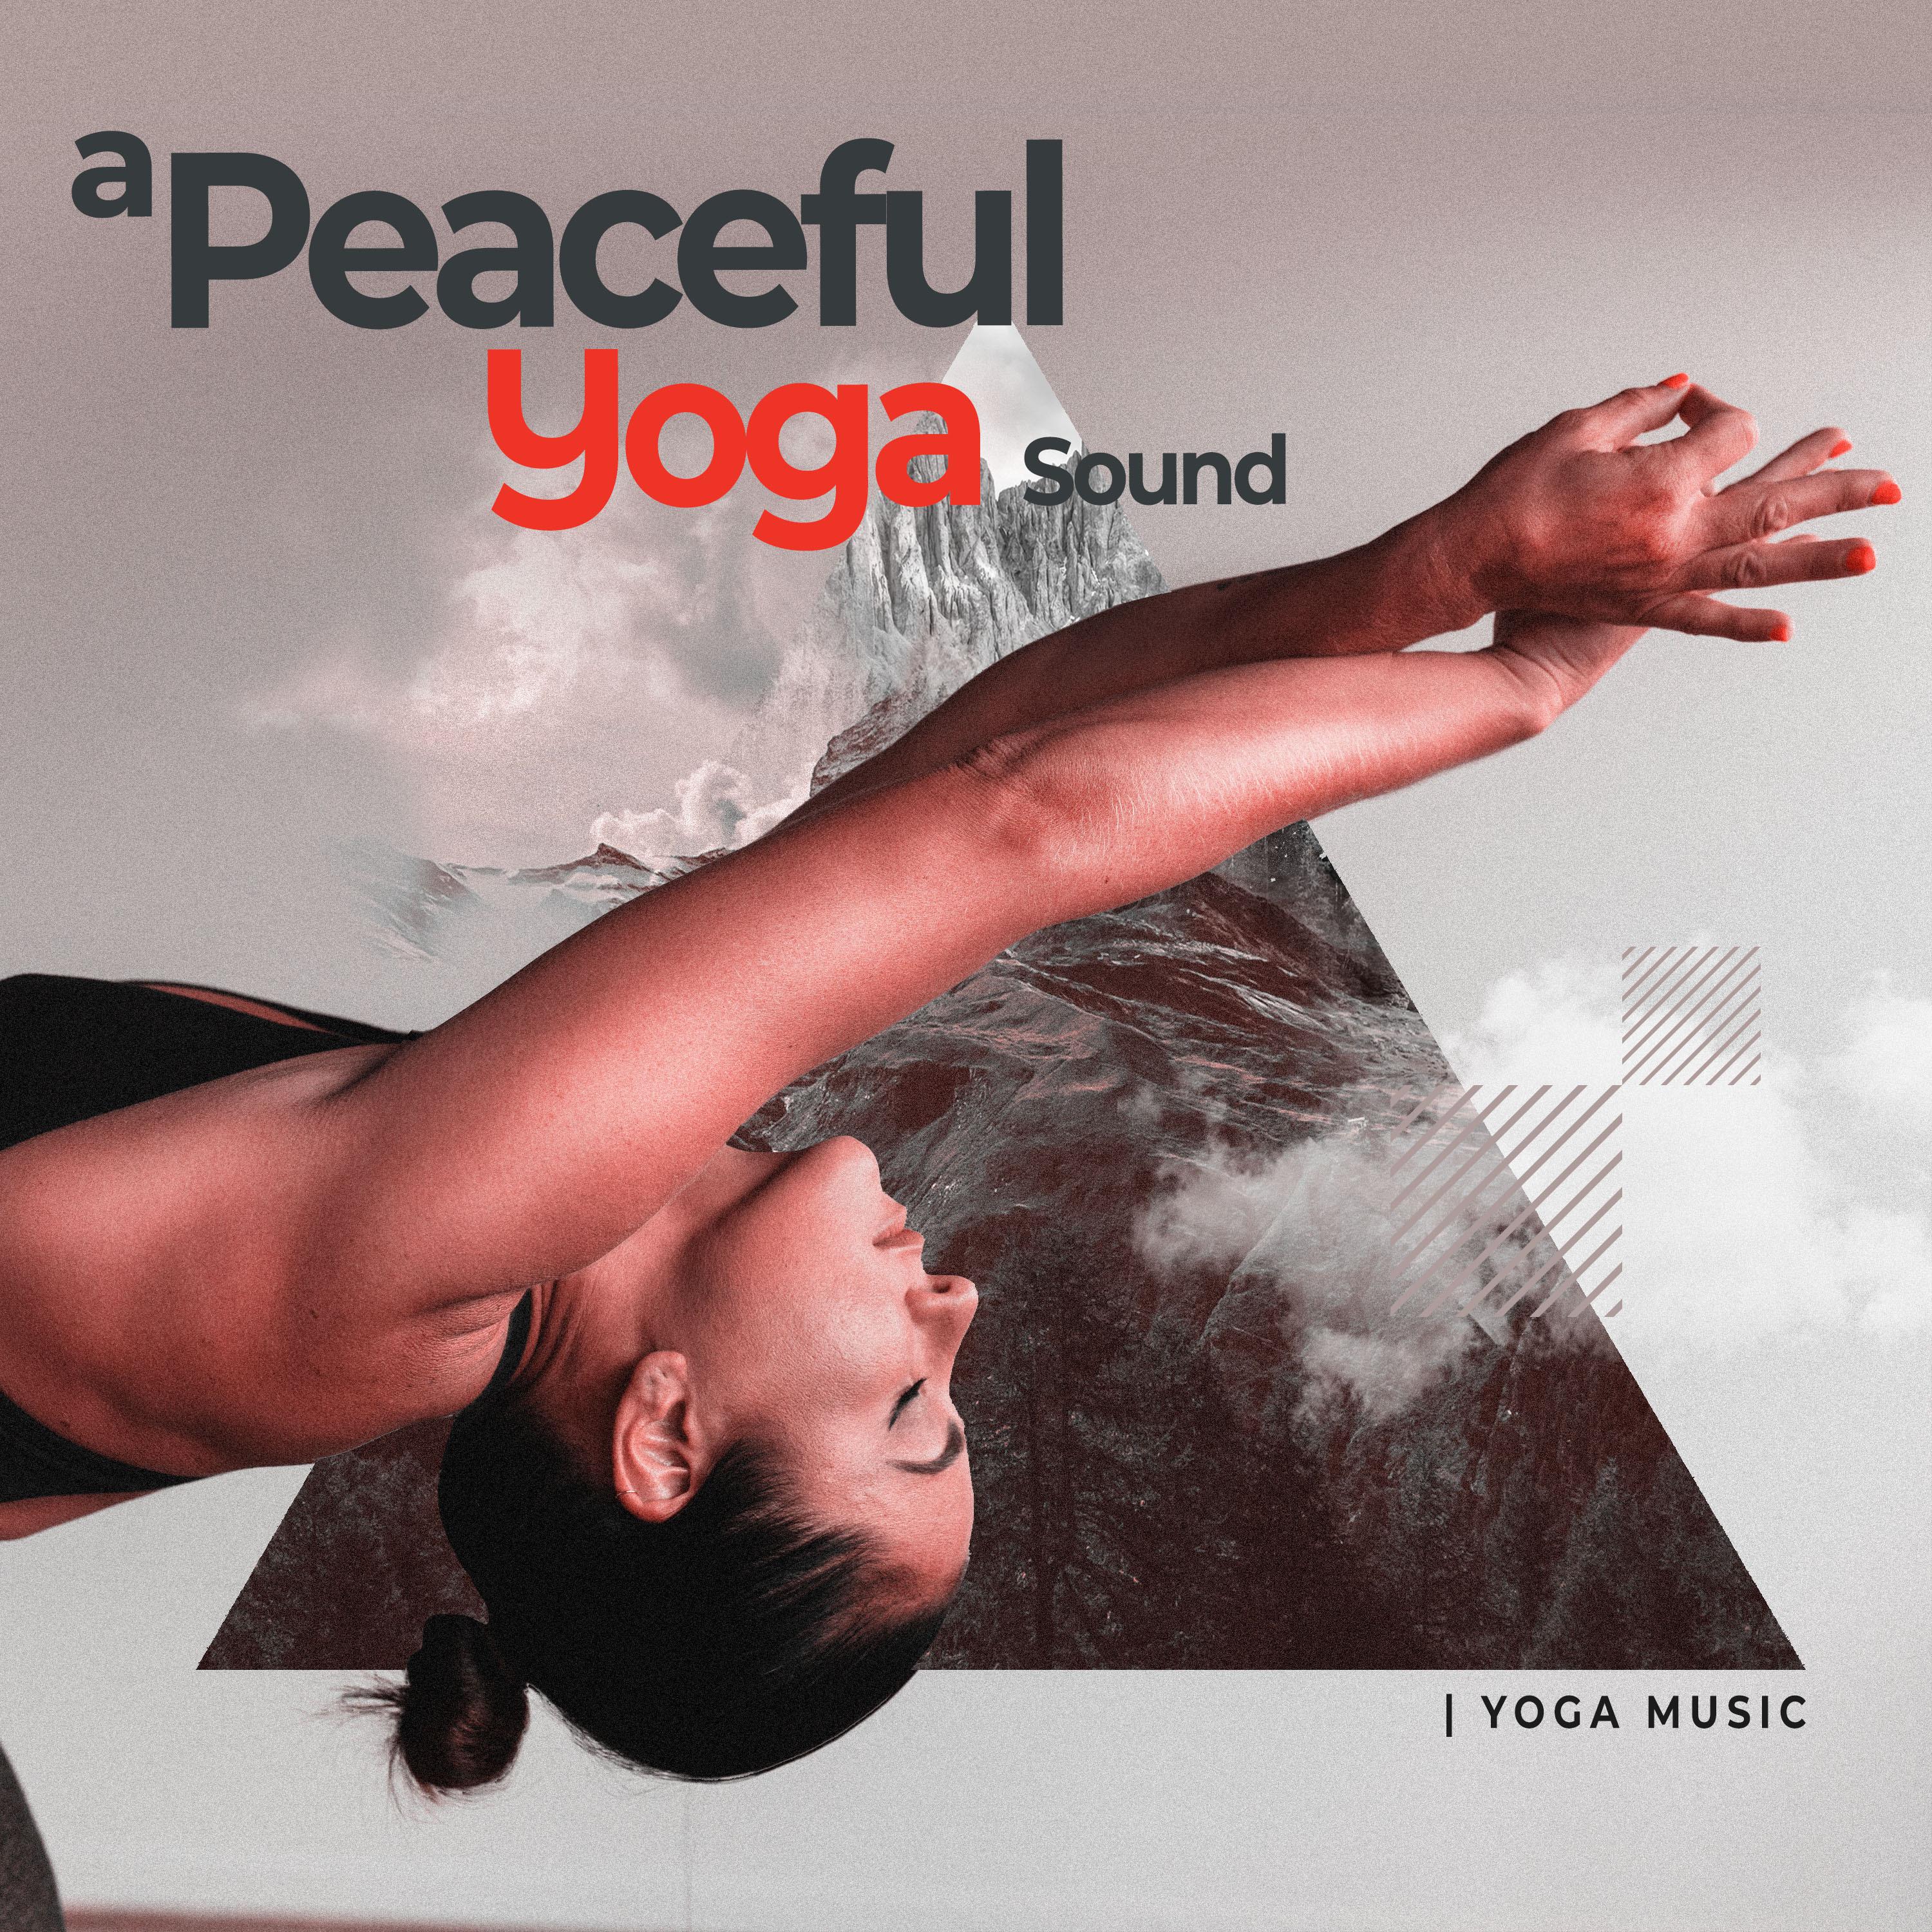 A Peaceful Yoga Sound